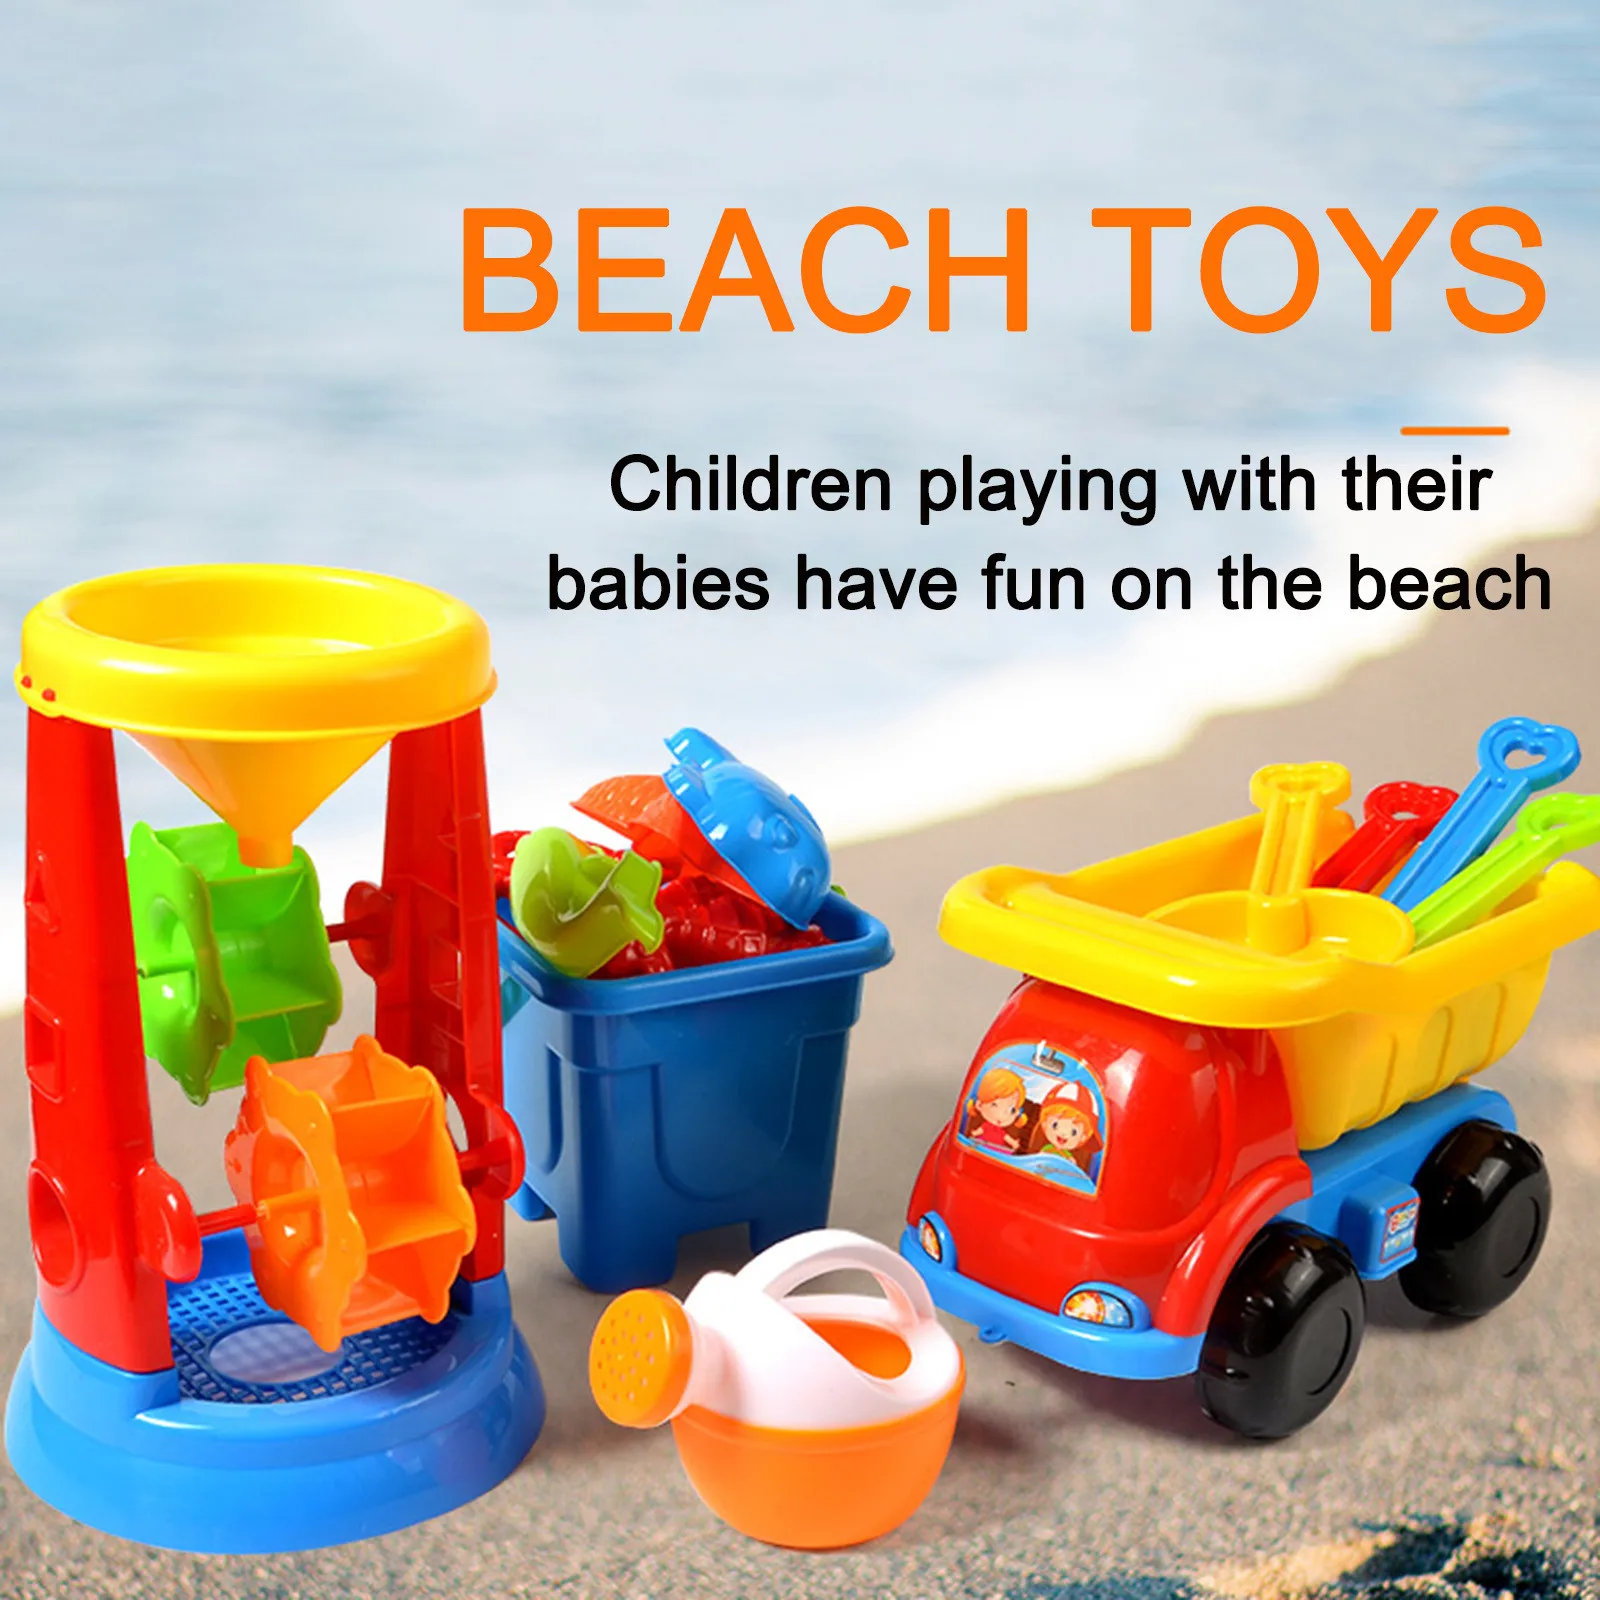 

16 Piece Beach Toy Sand Set Sand Play Sandpit Toy Summer Outdoor Toy Toys Juguetes Playa Jouet Plage Пляжные Игрушки Для Пляжа